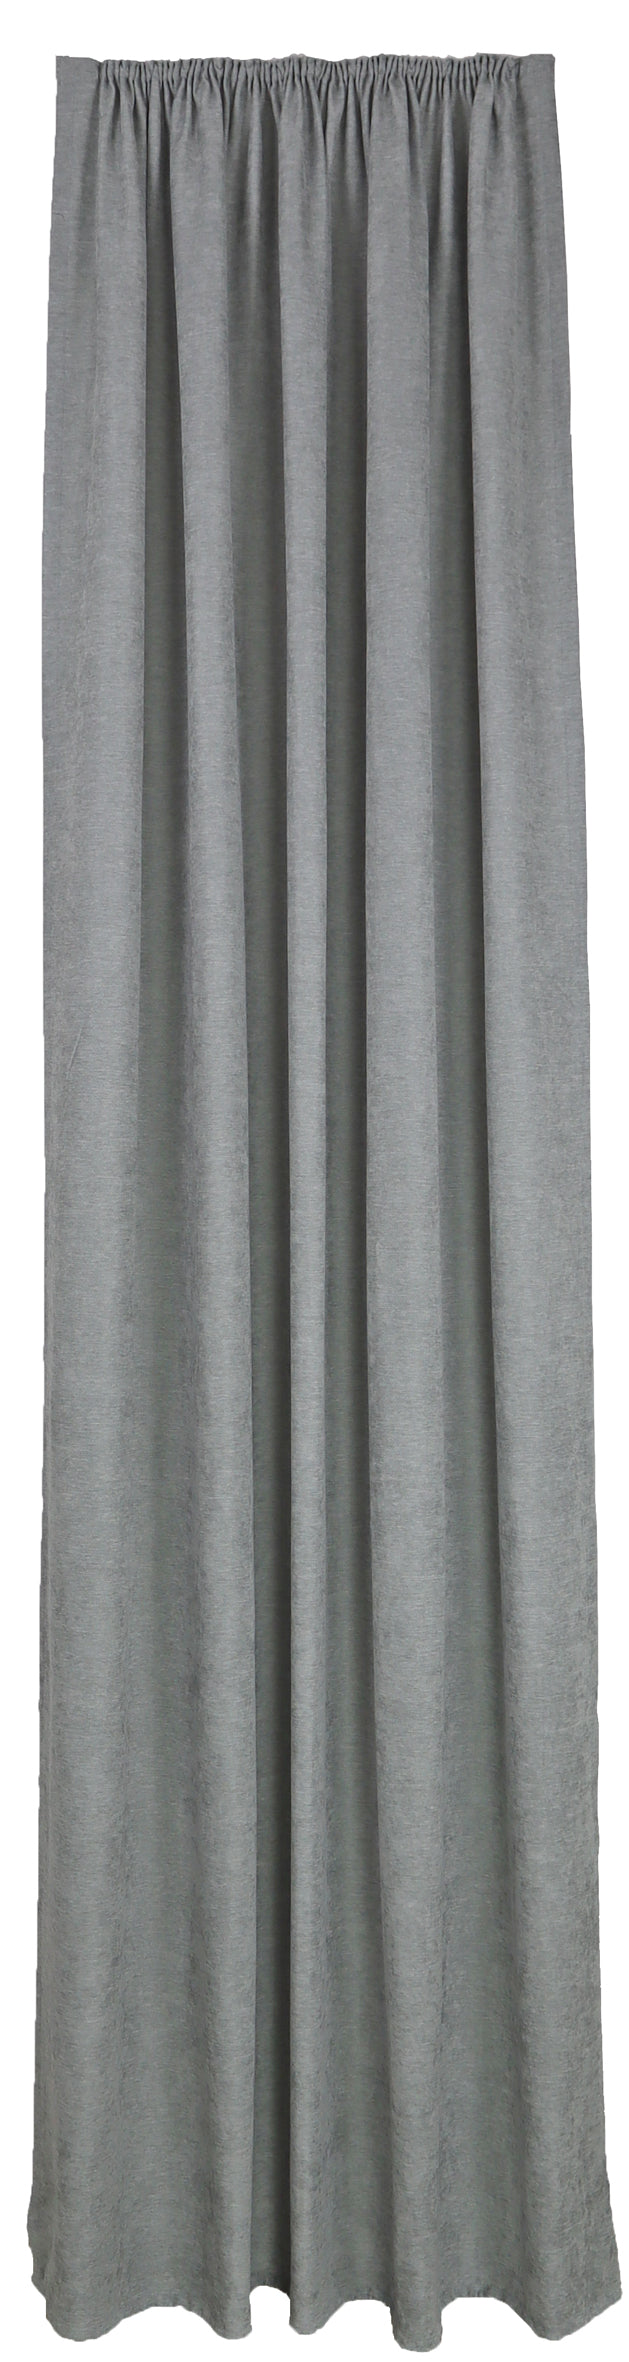 Night curtain gray Cem